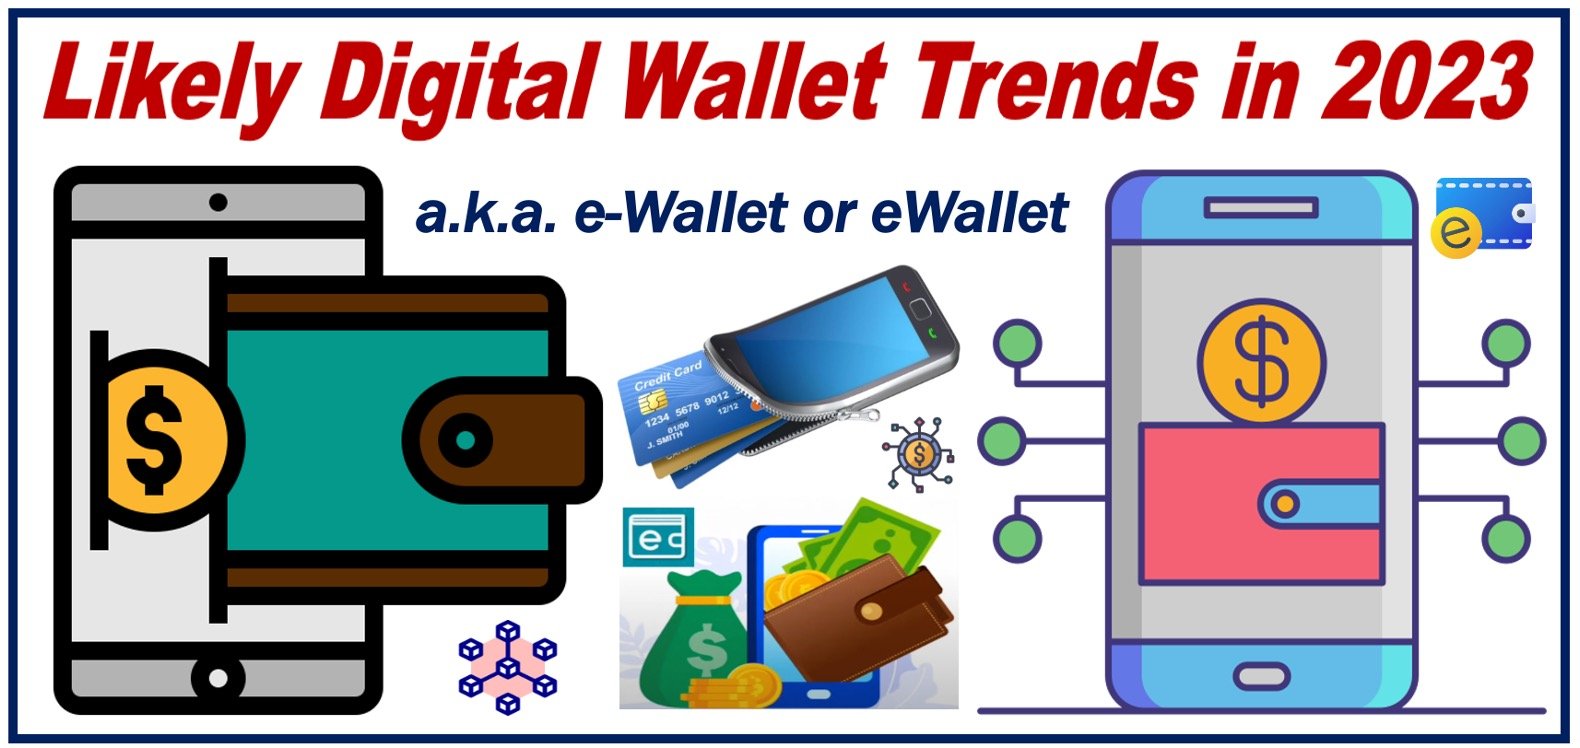 Likely Digital Wallet Trends in 2023